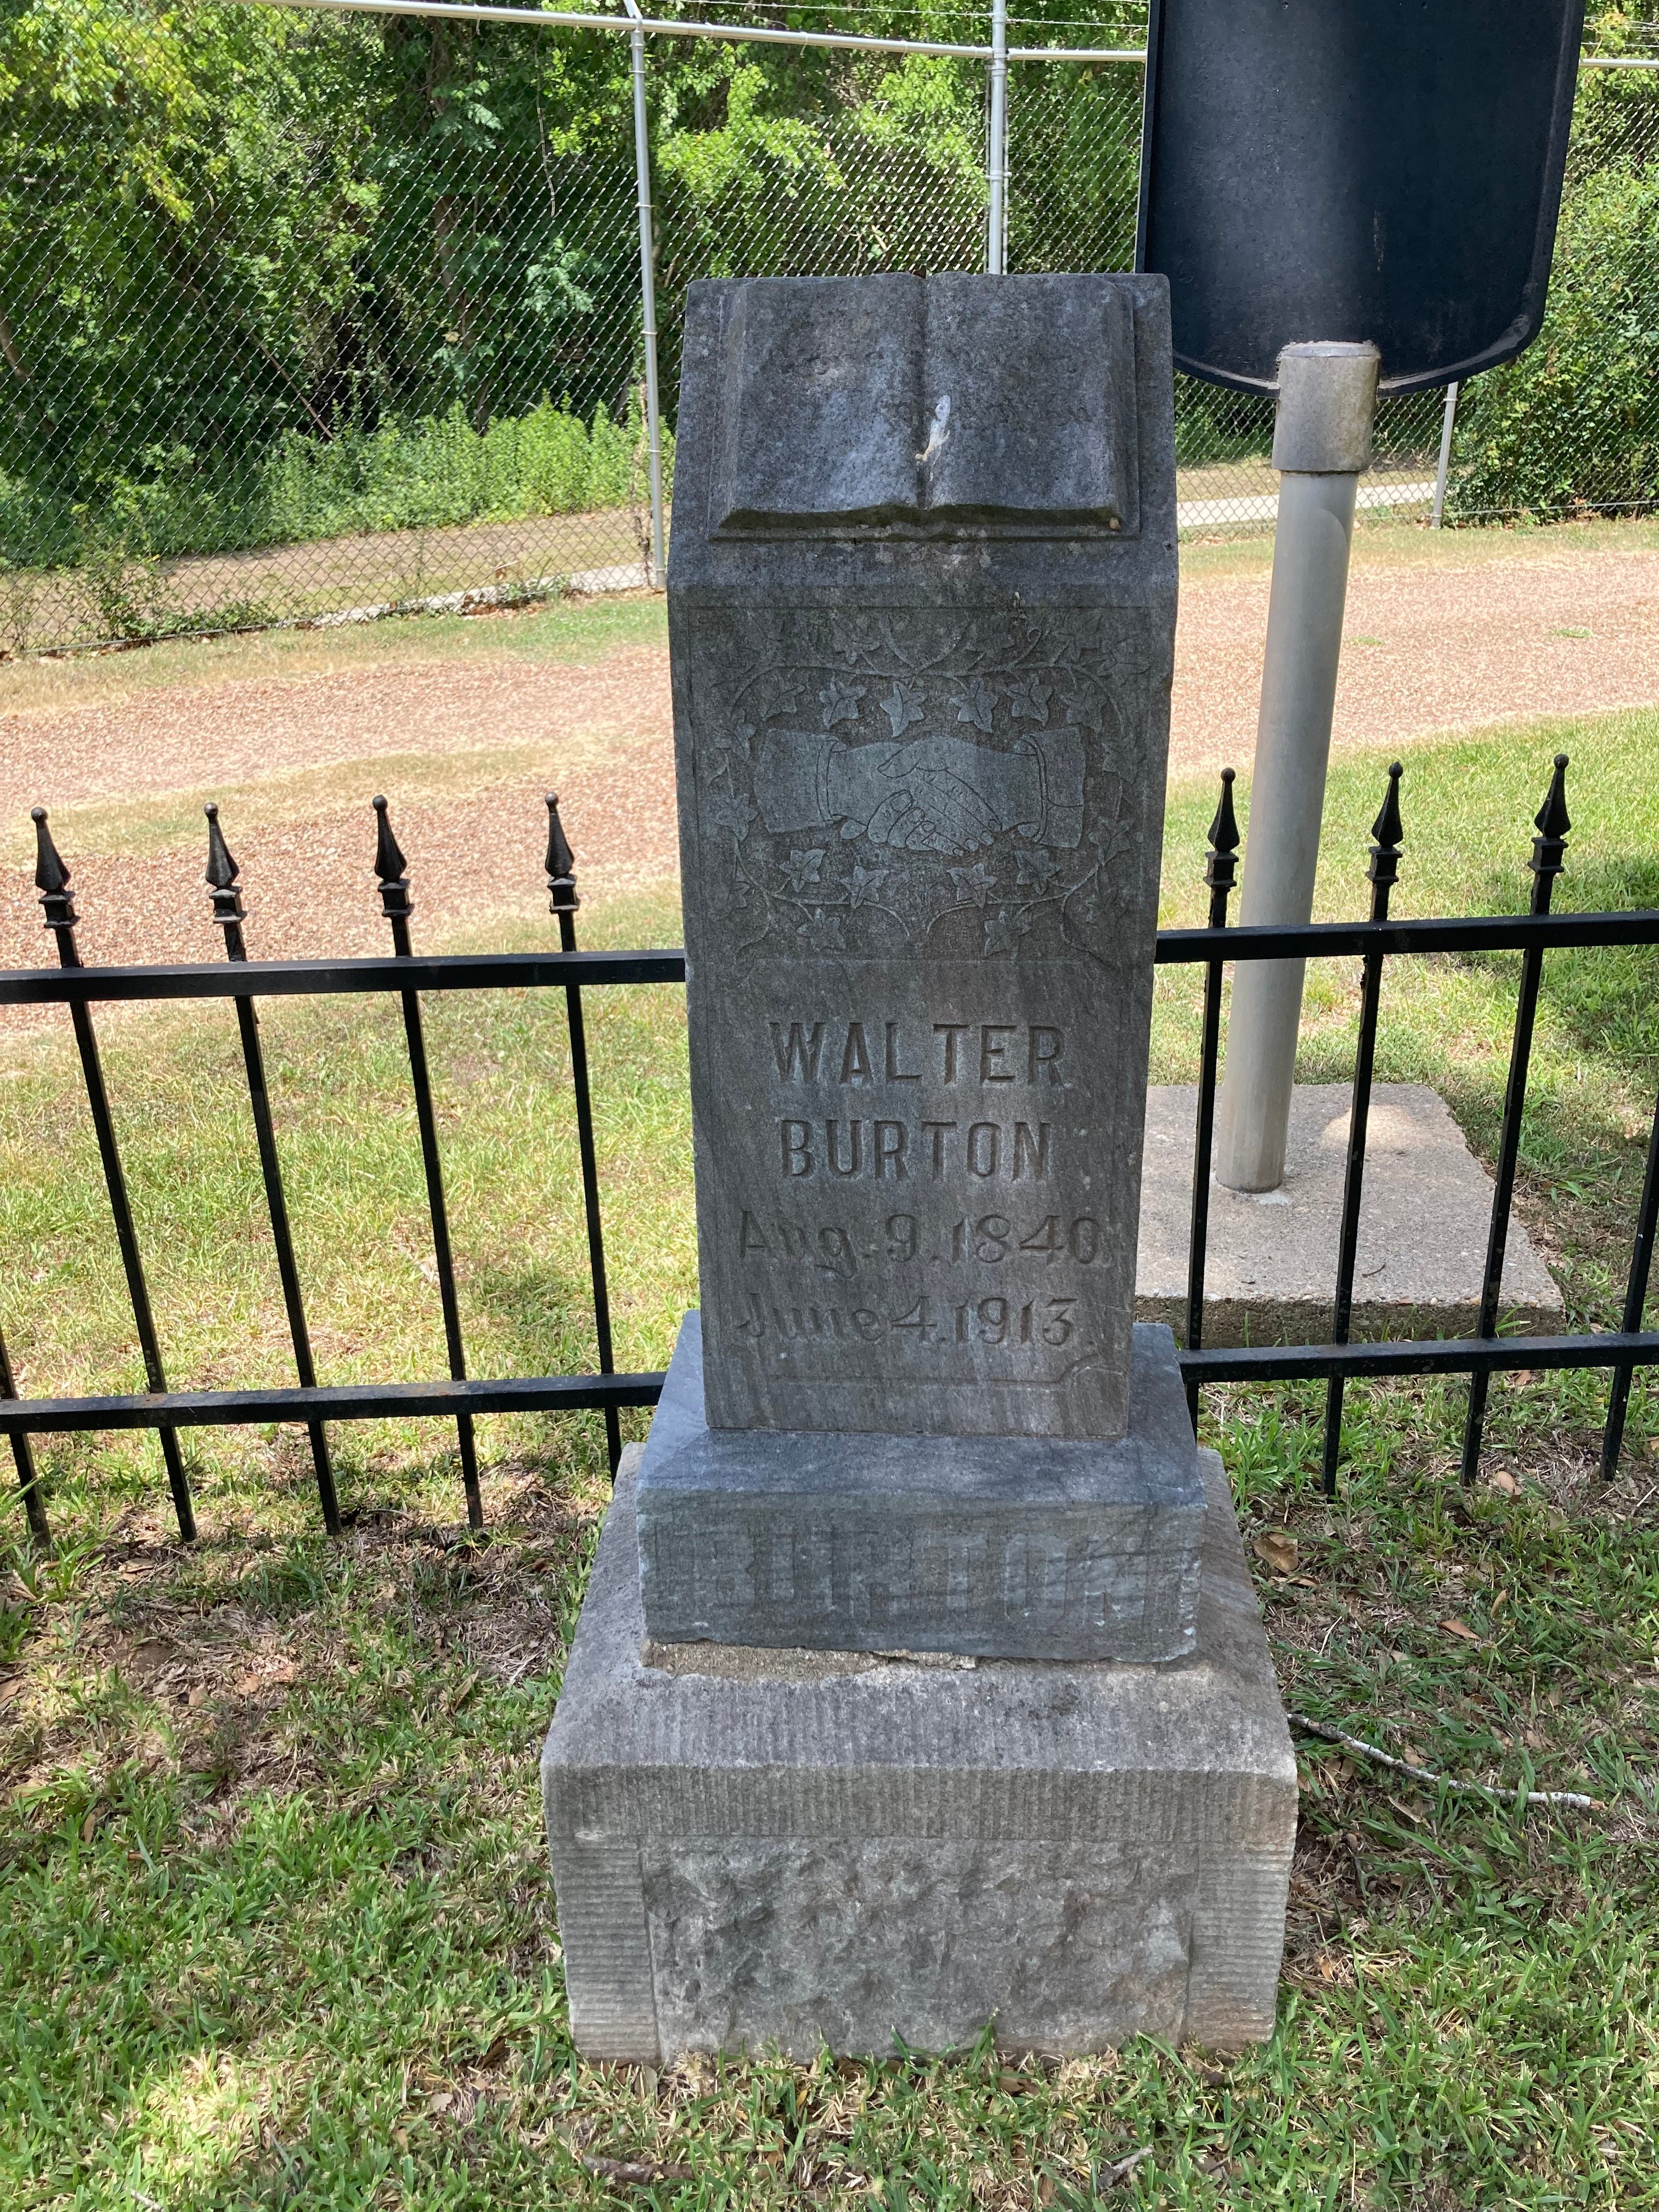 You can visit Burton’s grave at the Morton Cemetery in Richmond, Texas. 
